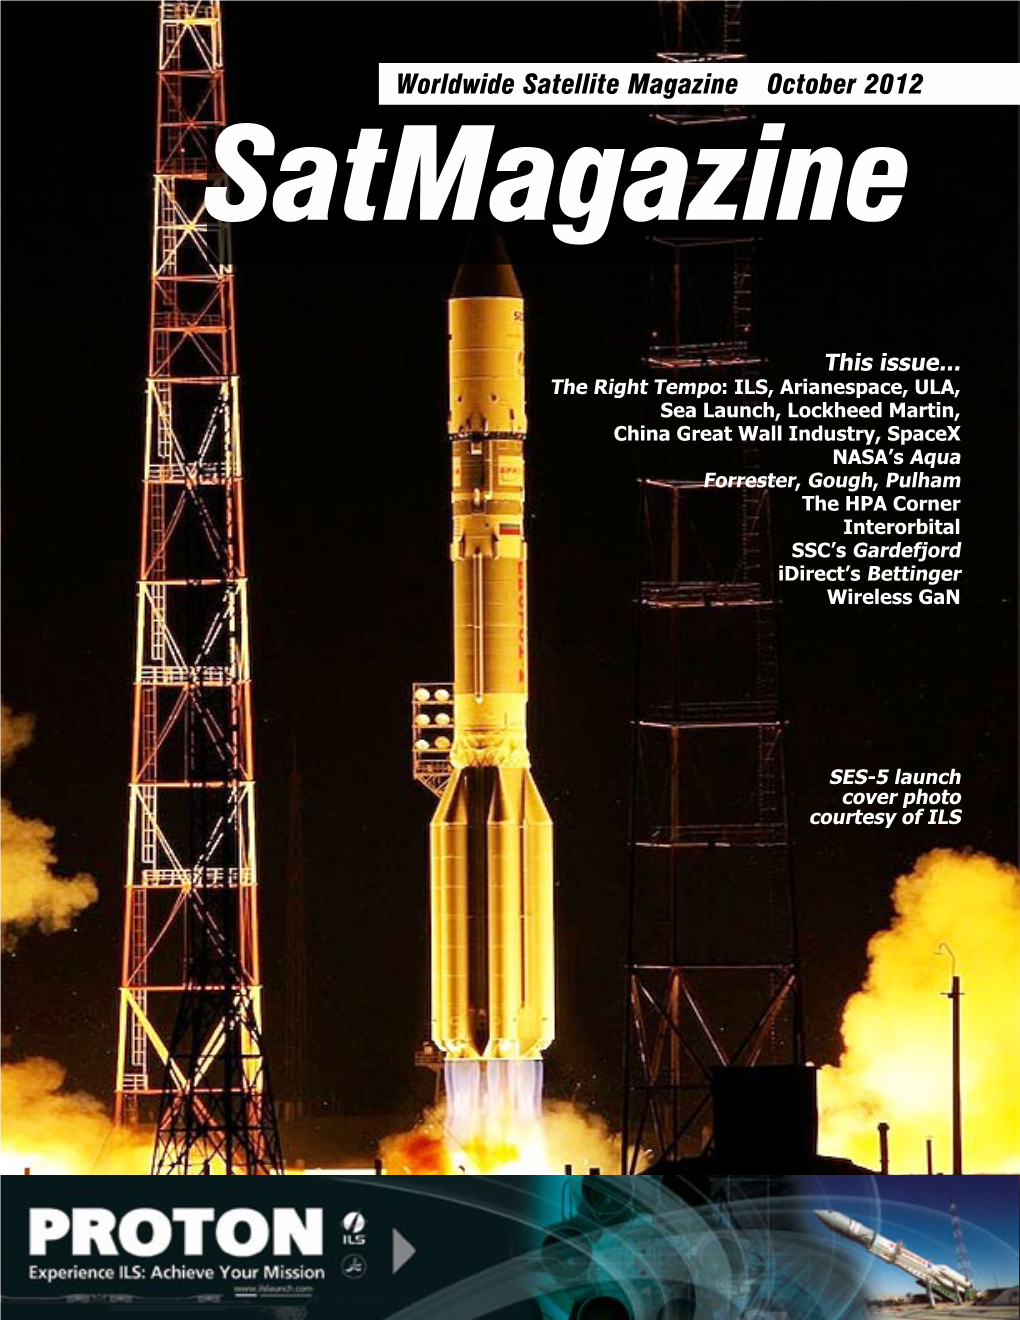 Worldwide Satellite Magazine October 2012 Satmagazine